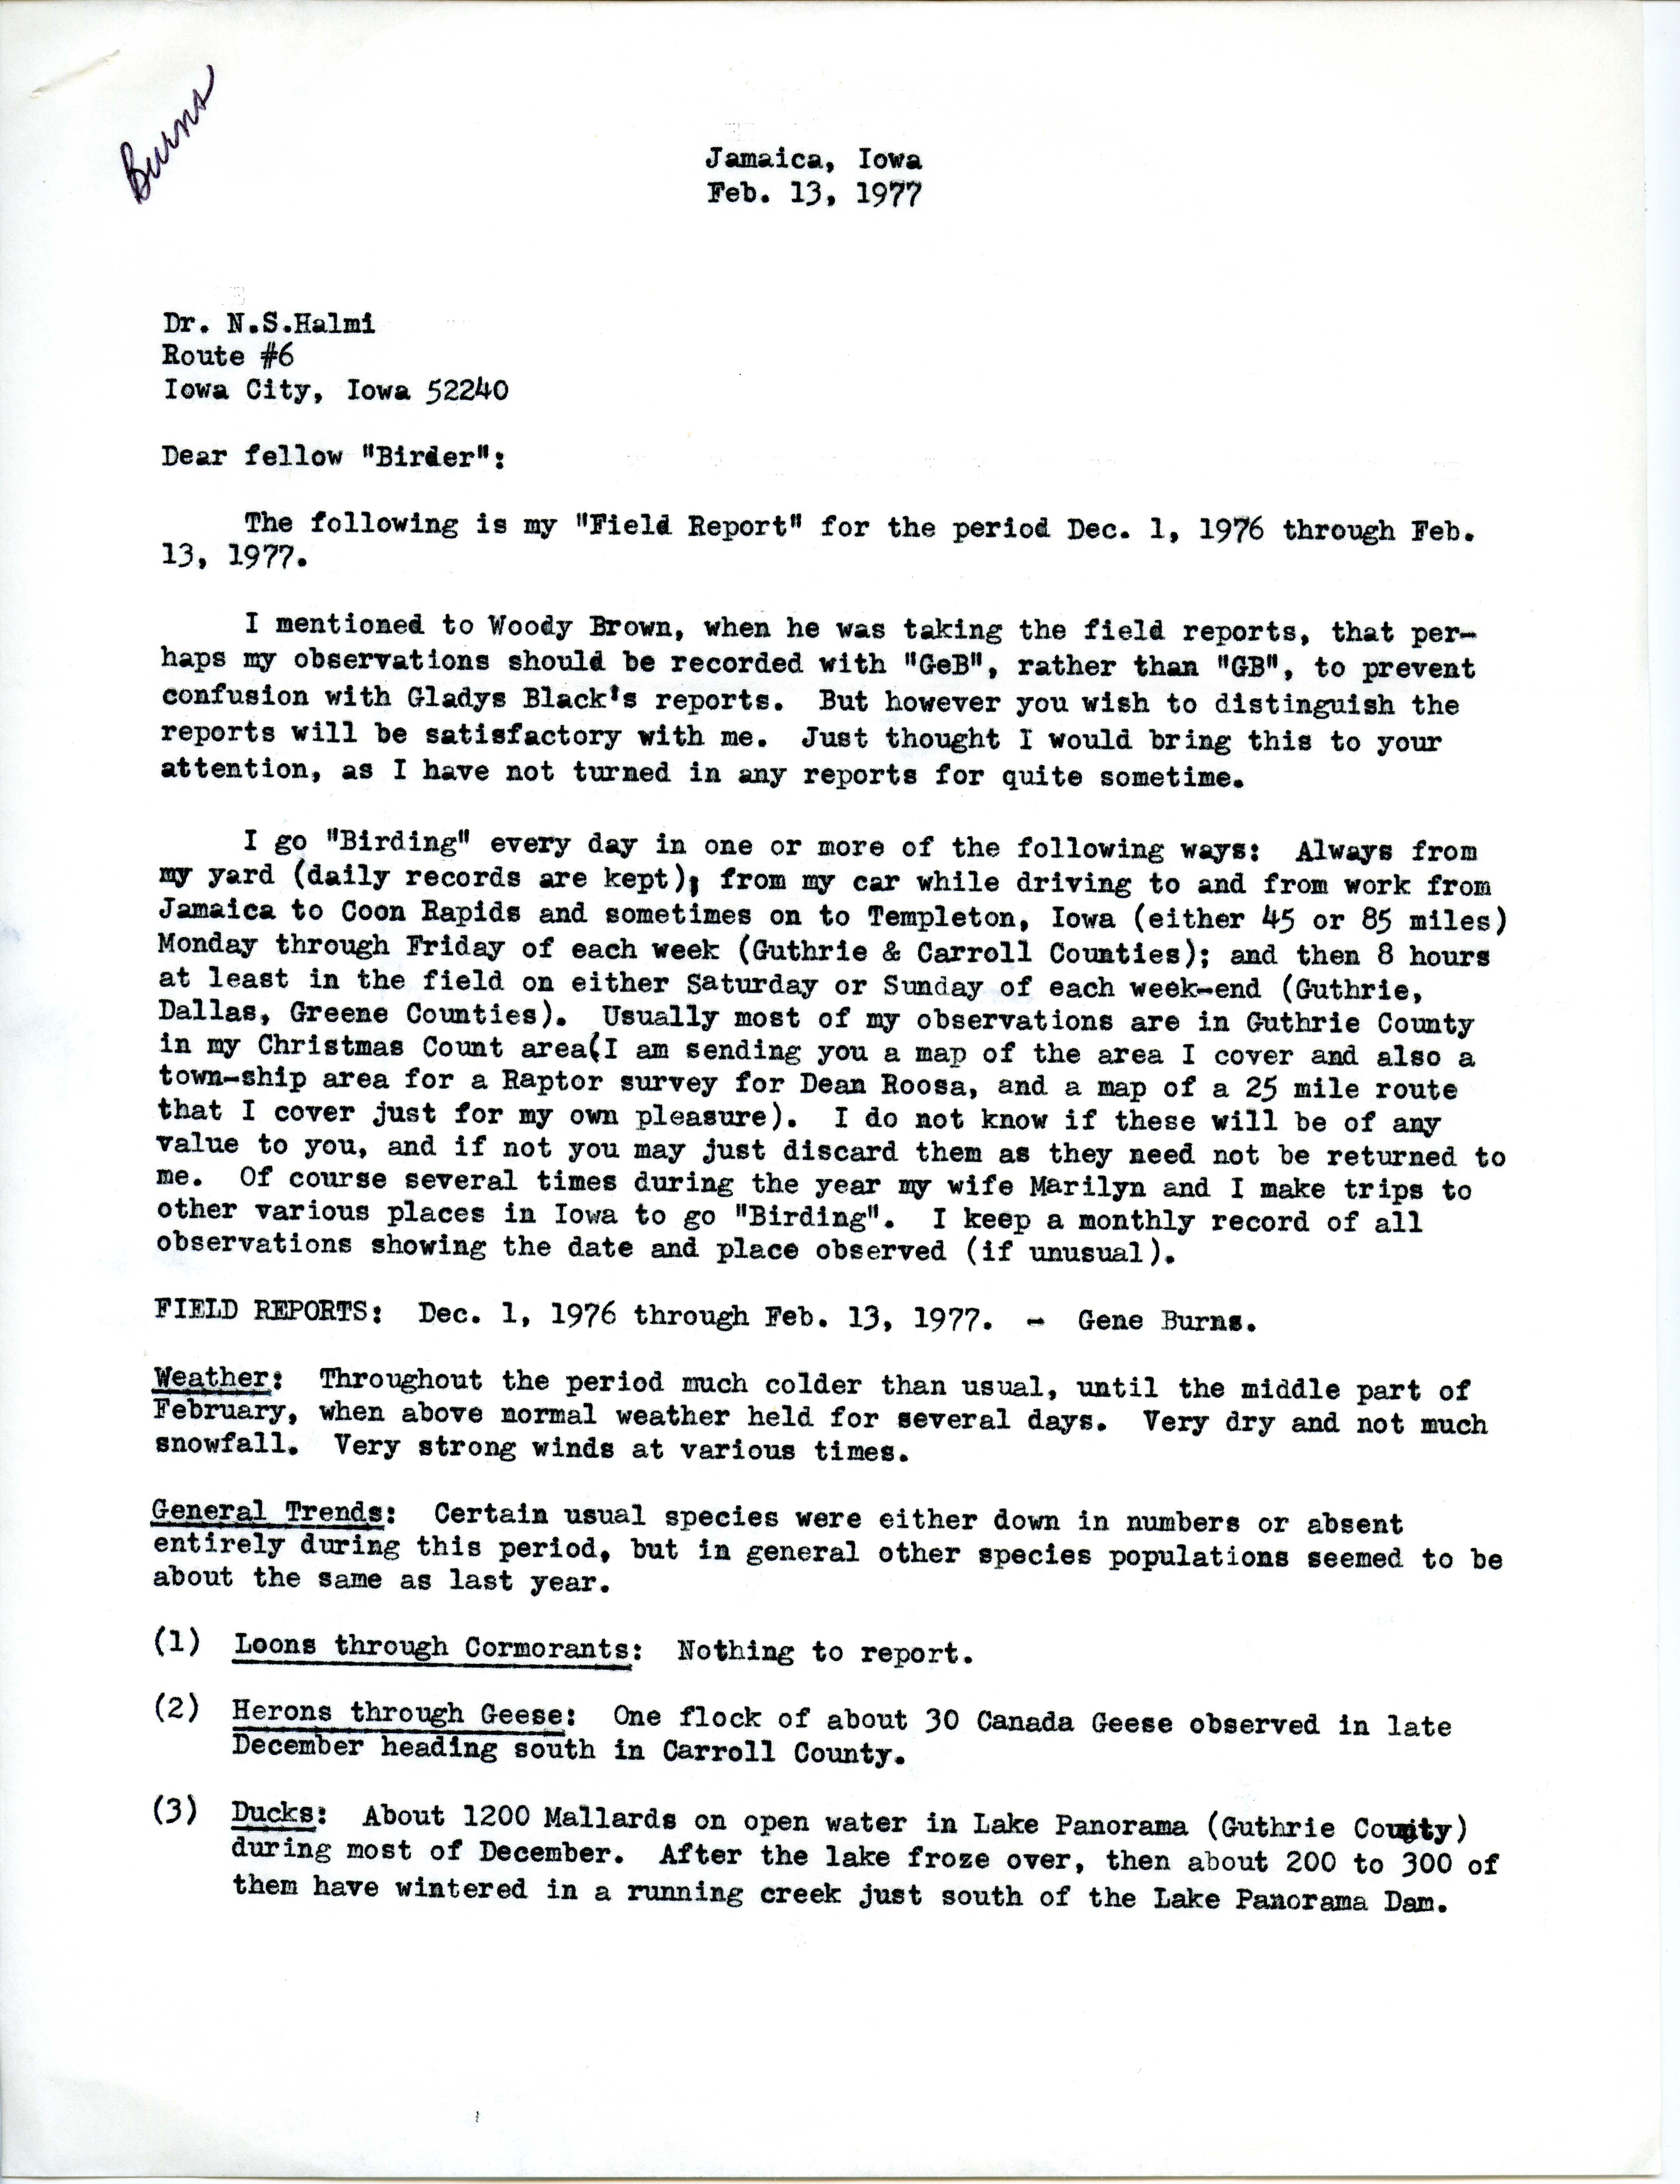 Gene Burns letter to Nicholas S. Halmi regarding bird sightings, February 13, 1977